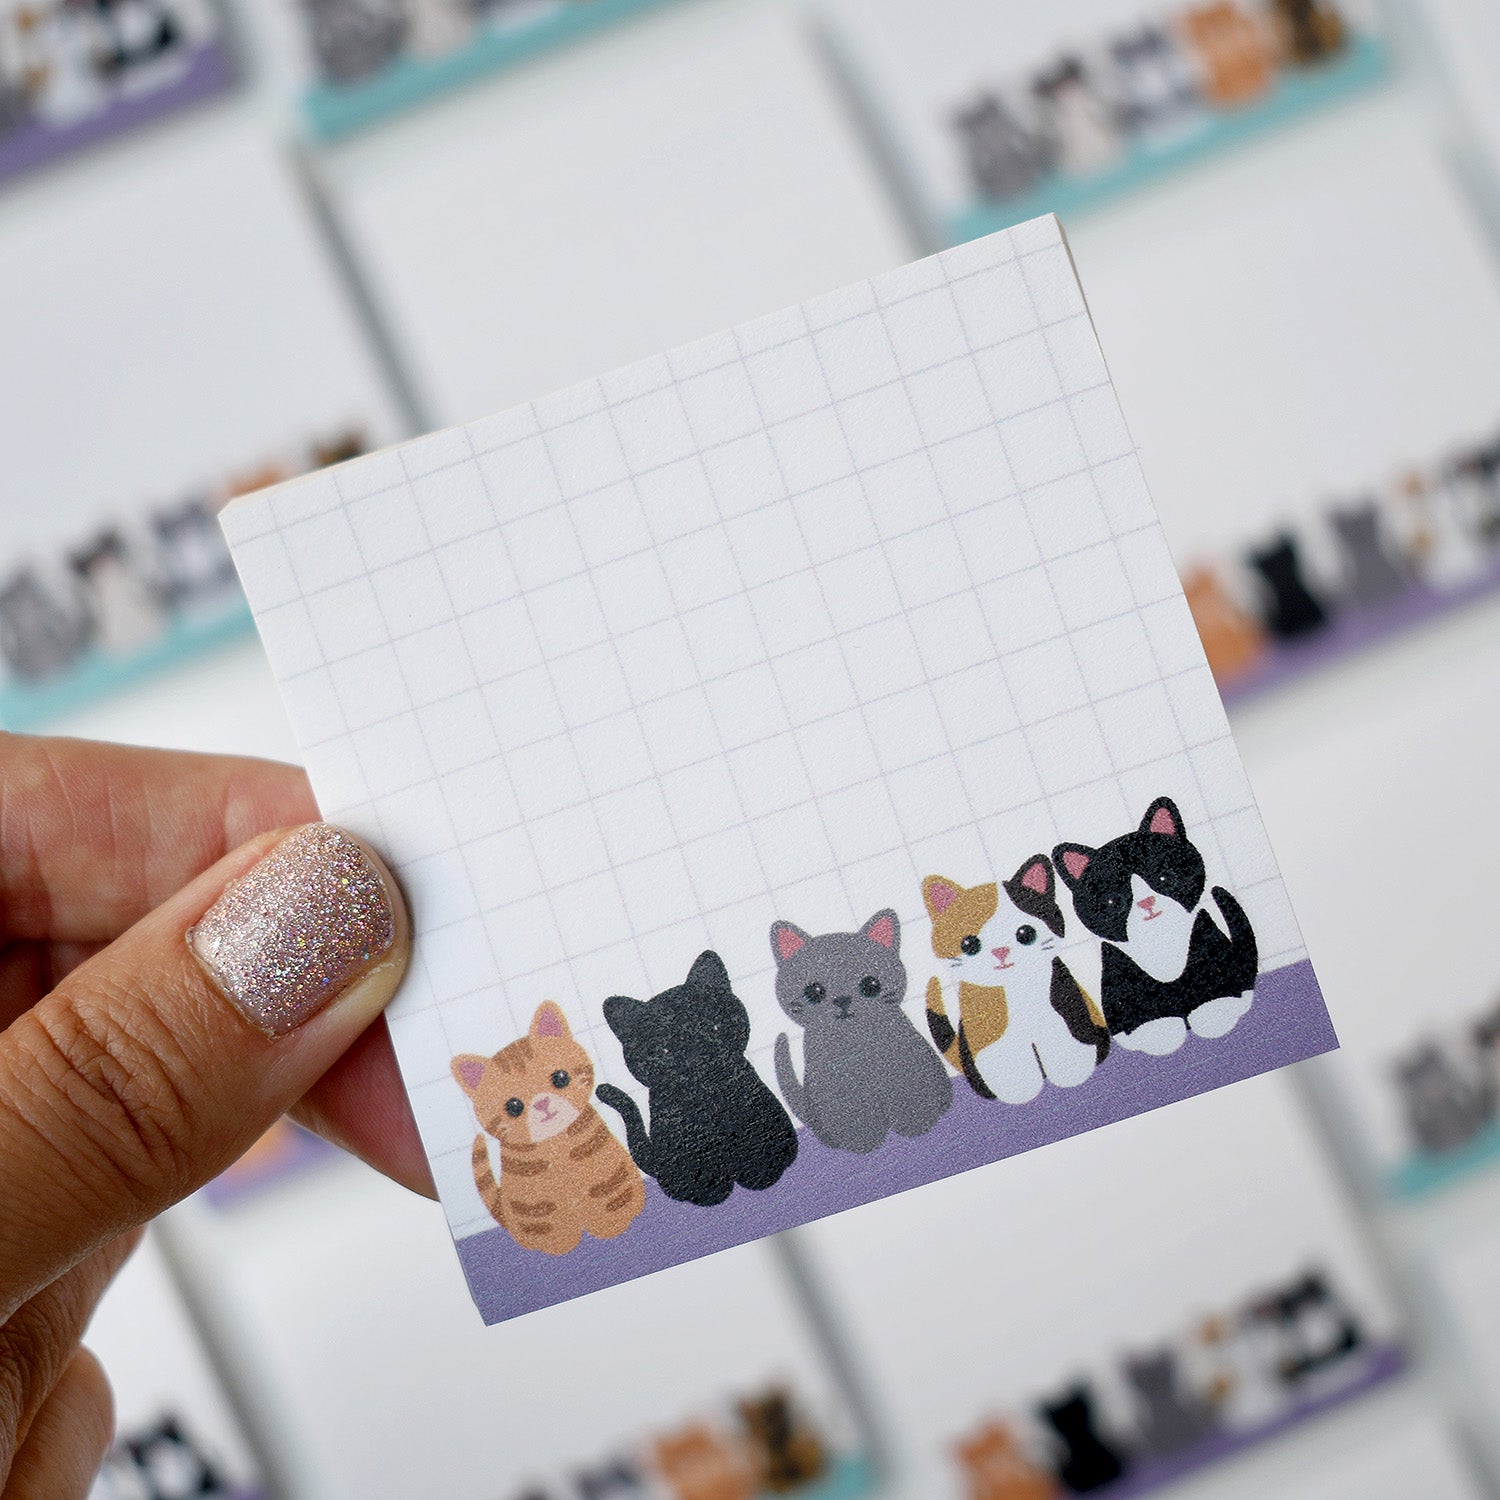 50 Sheet Kawaii Cat Sticky Note American Style Lovely Cartoon Cat